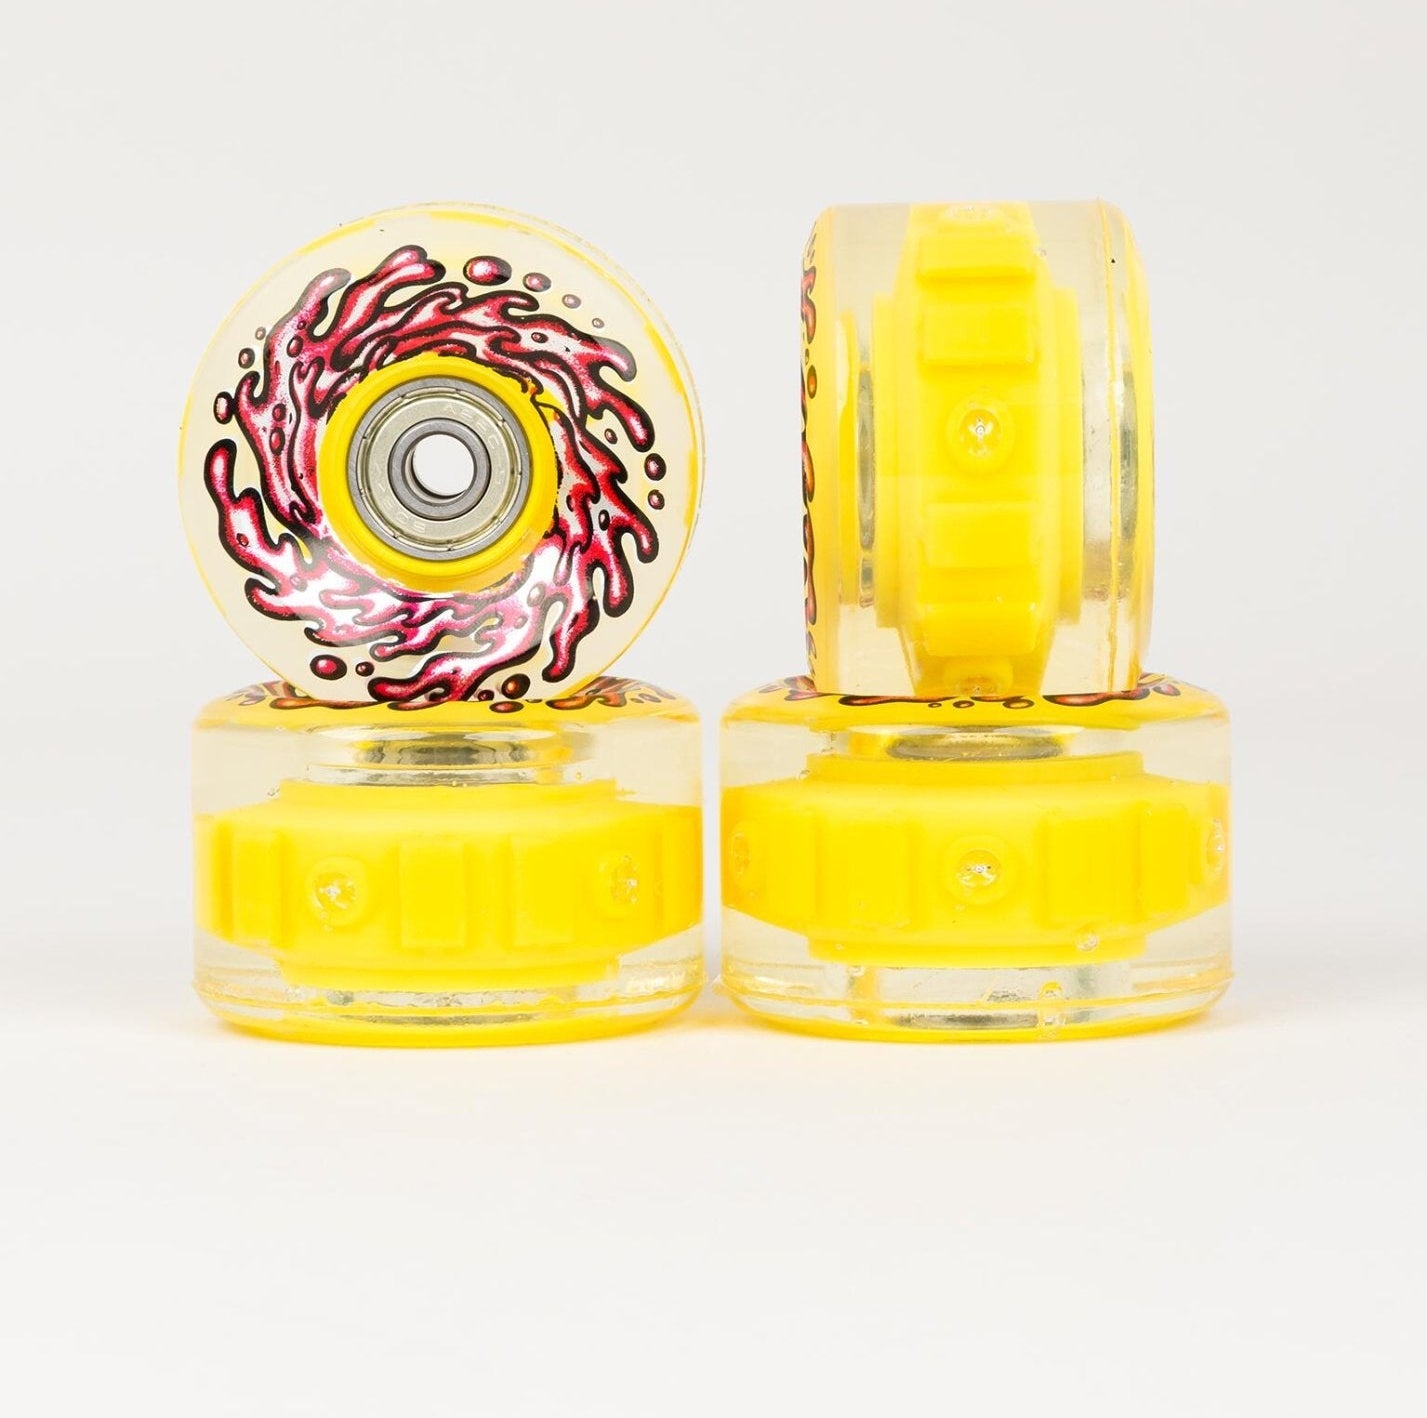 Slime Balls 60mm Light Ups w/RED and YELLOW LED OG Slime 78a - SkateTillDeath.com